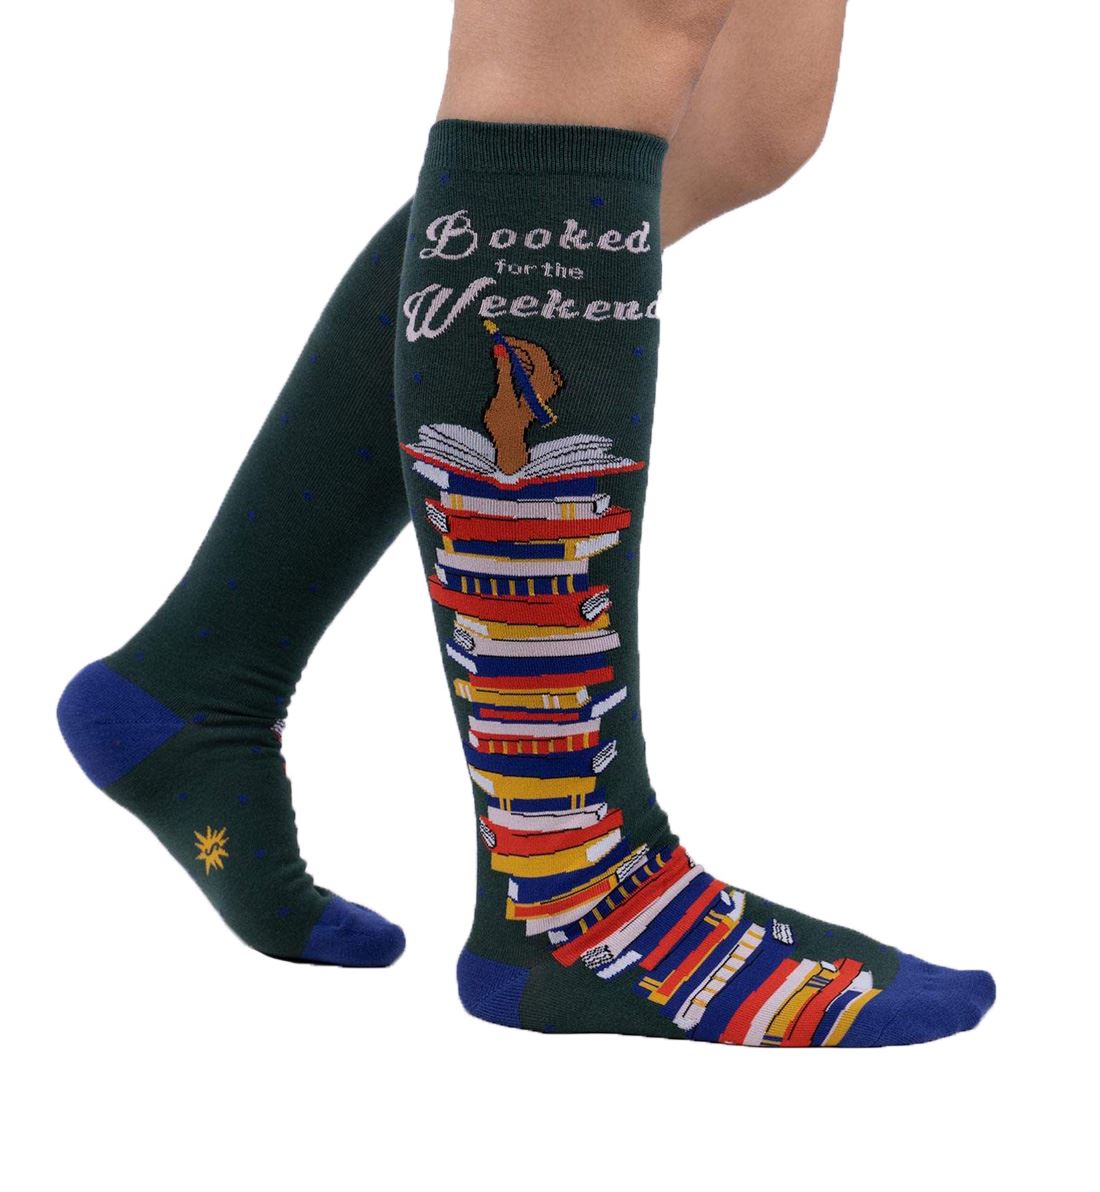 SOCK it to me Unisex Knee High Socks (F0517),Booked for the Weekend - Booked for the Weekend,One Size